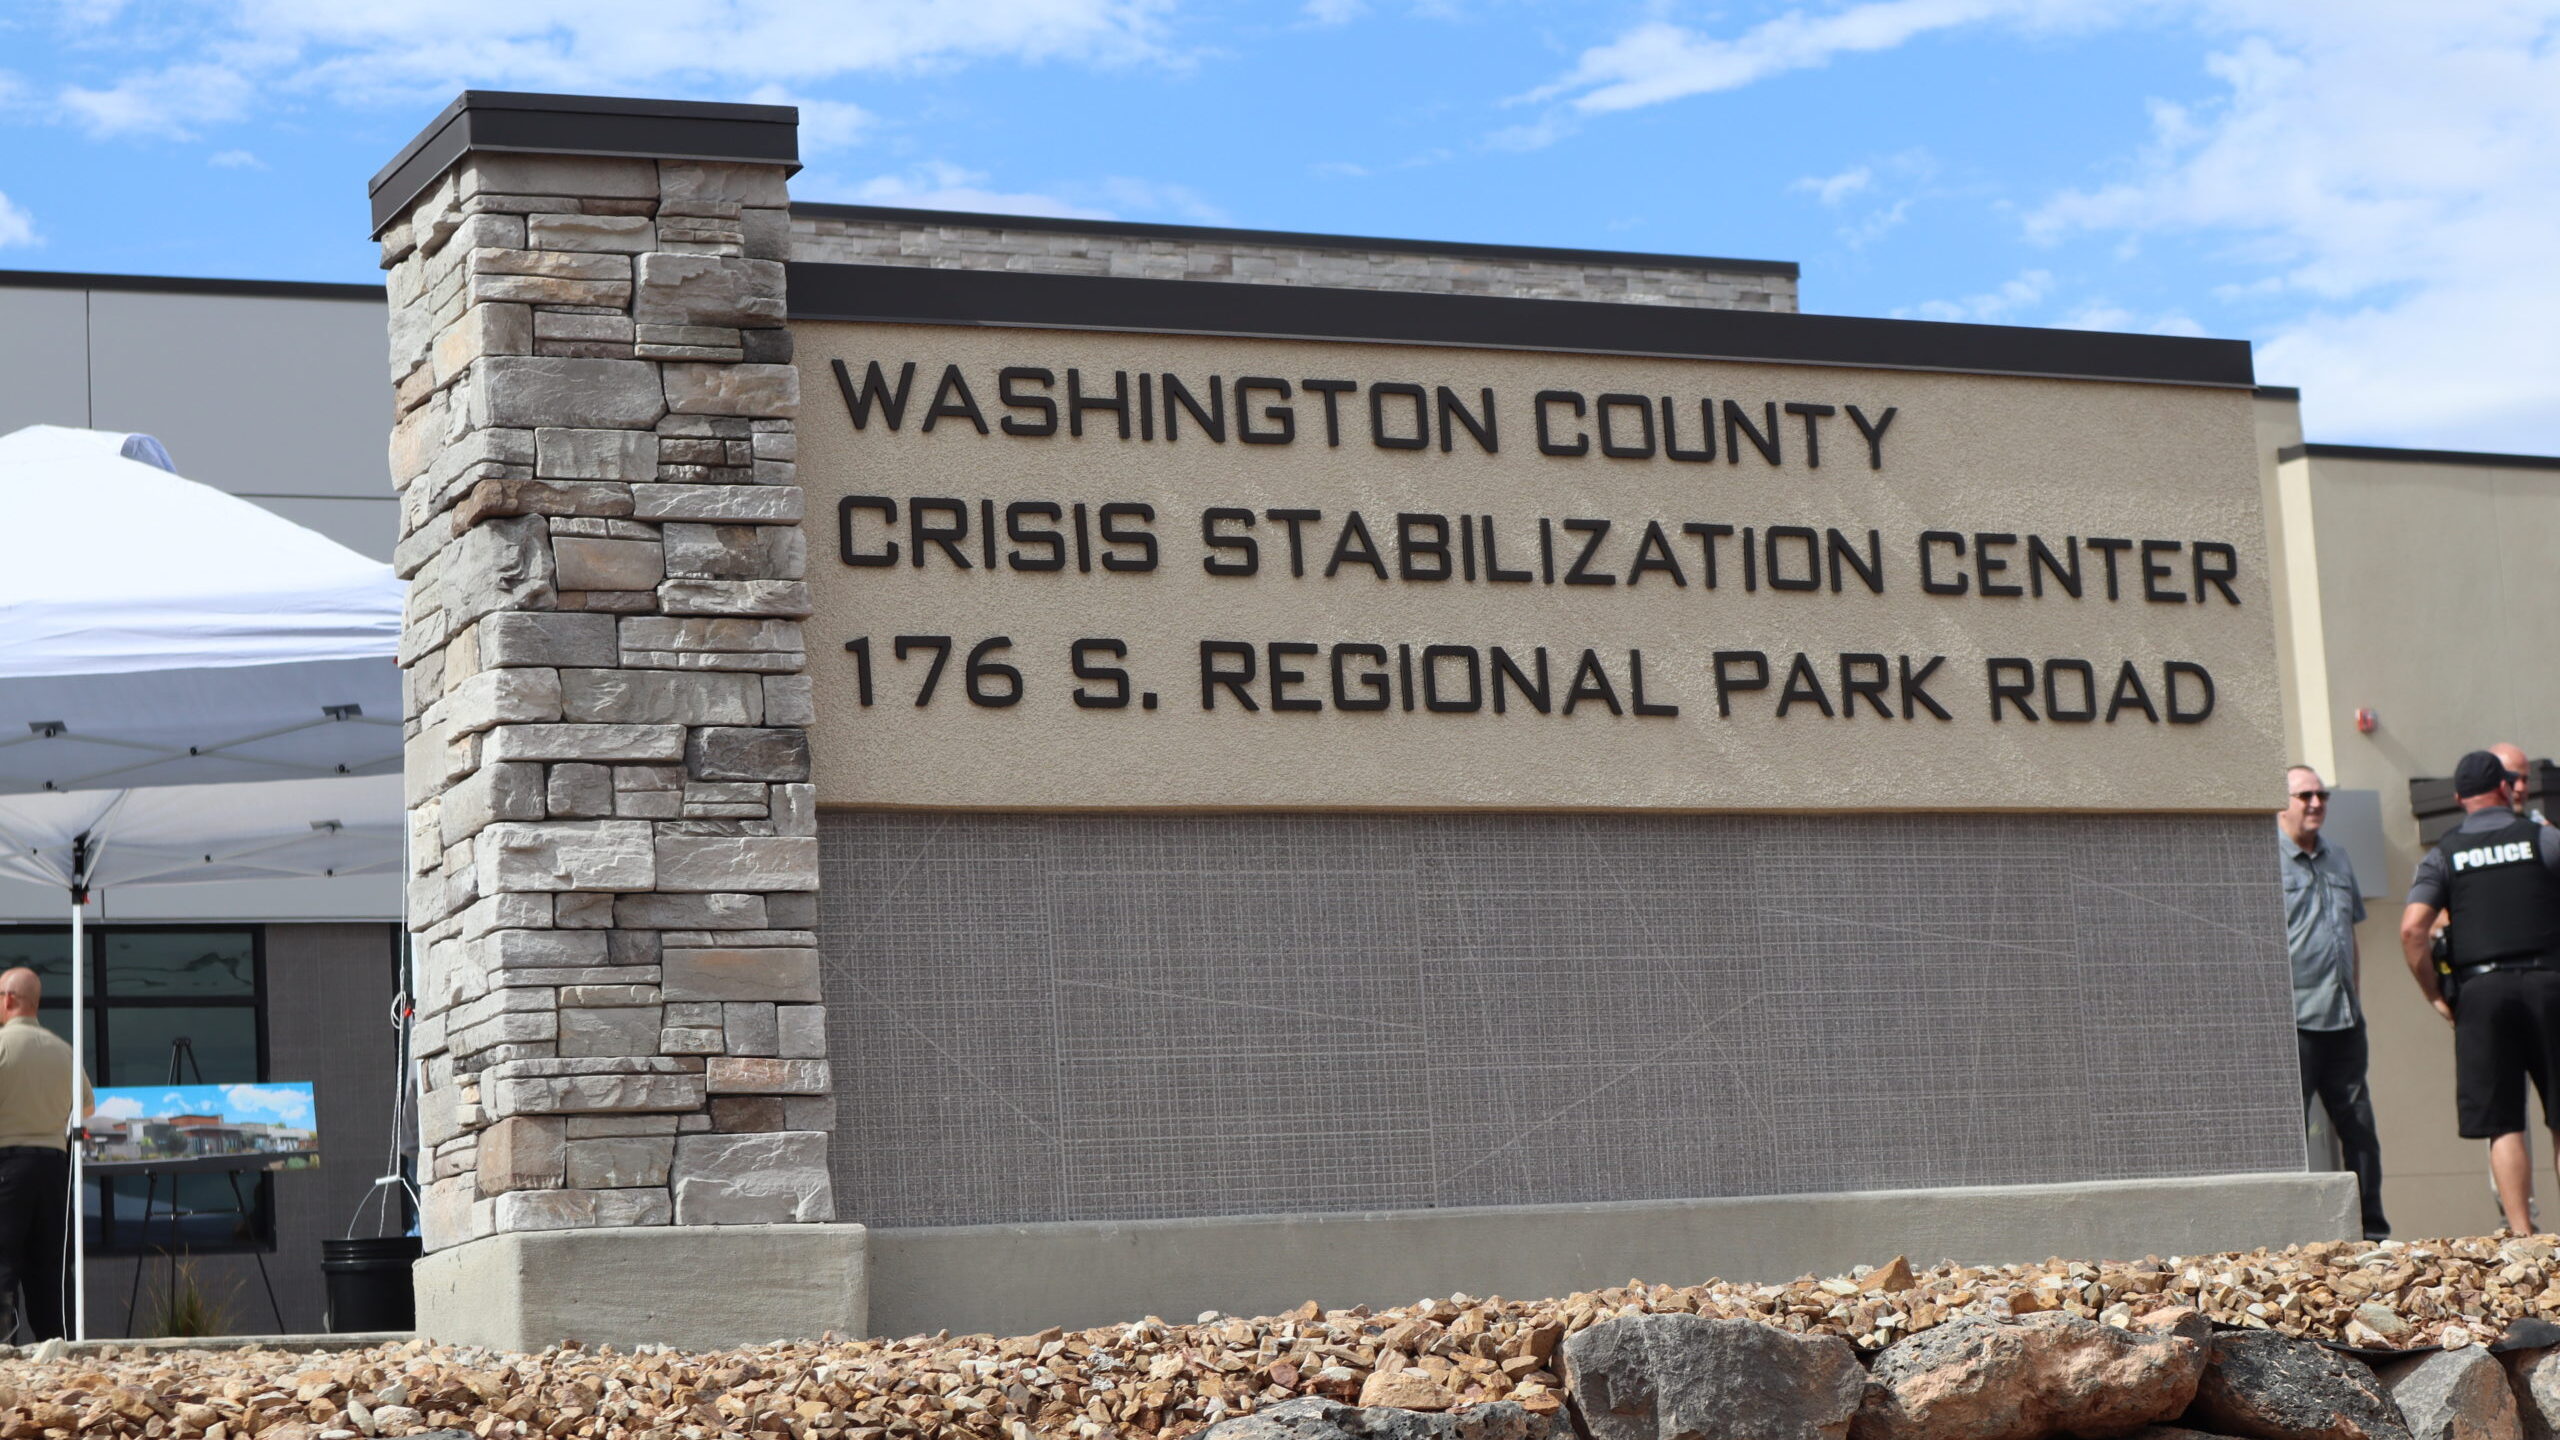 sign for washington county Crisis Stabilization Center...